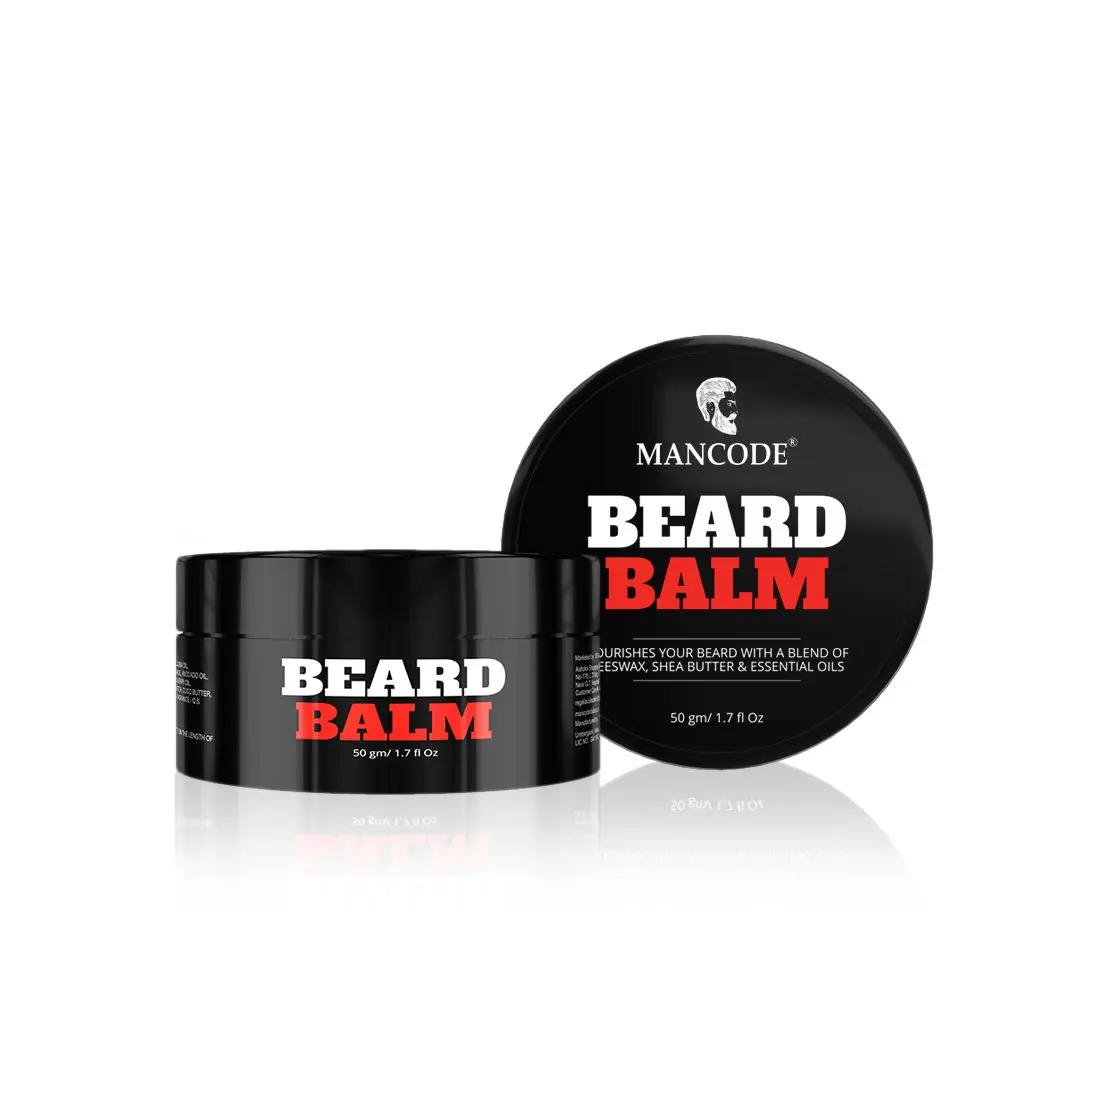 Mancode Beard Balm (50 g)